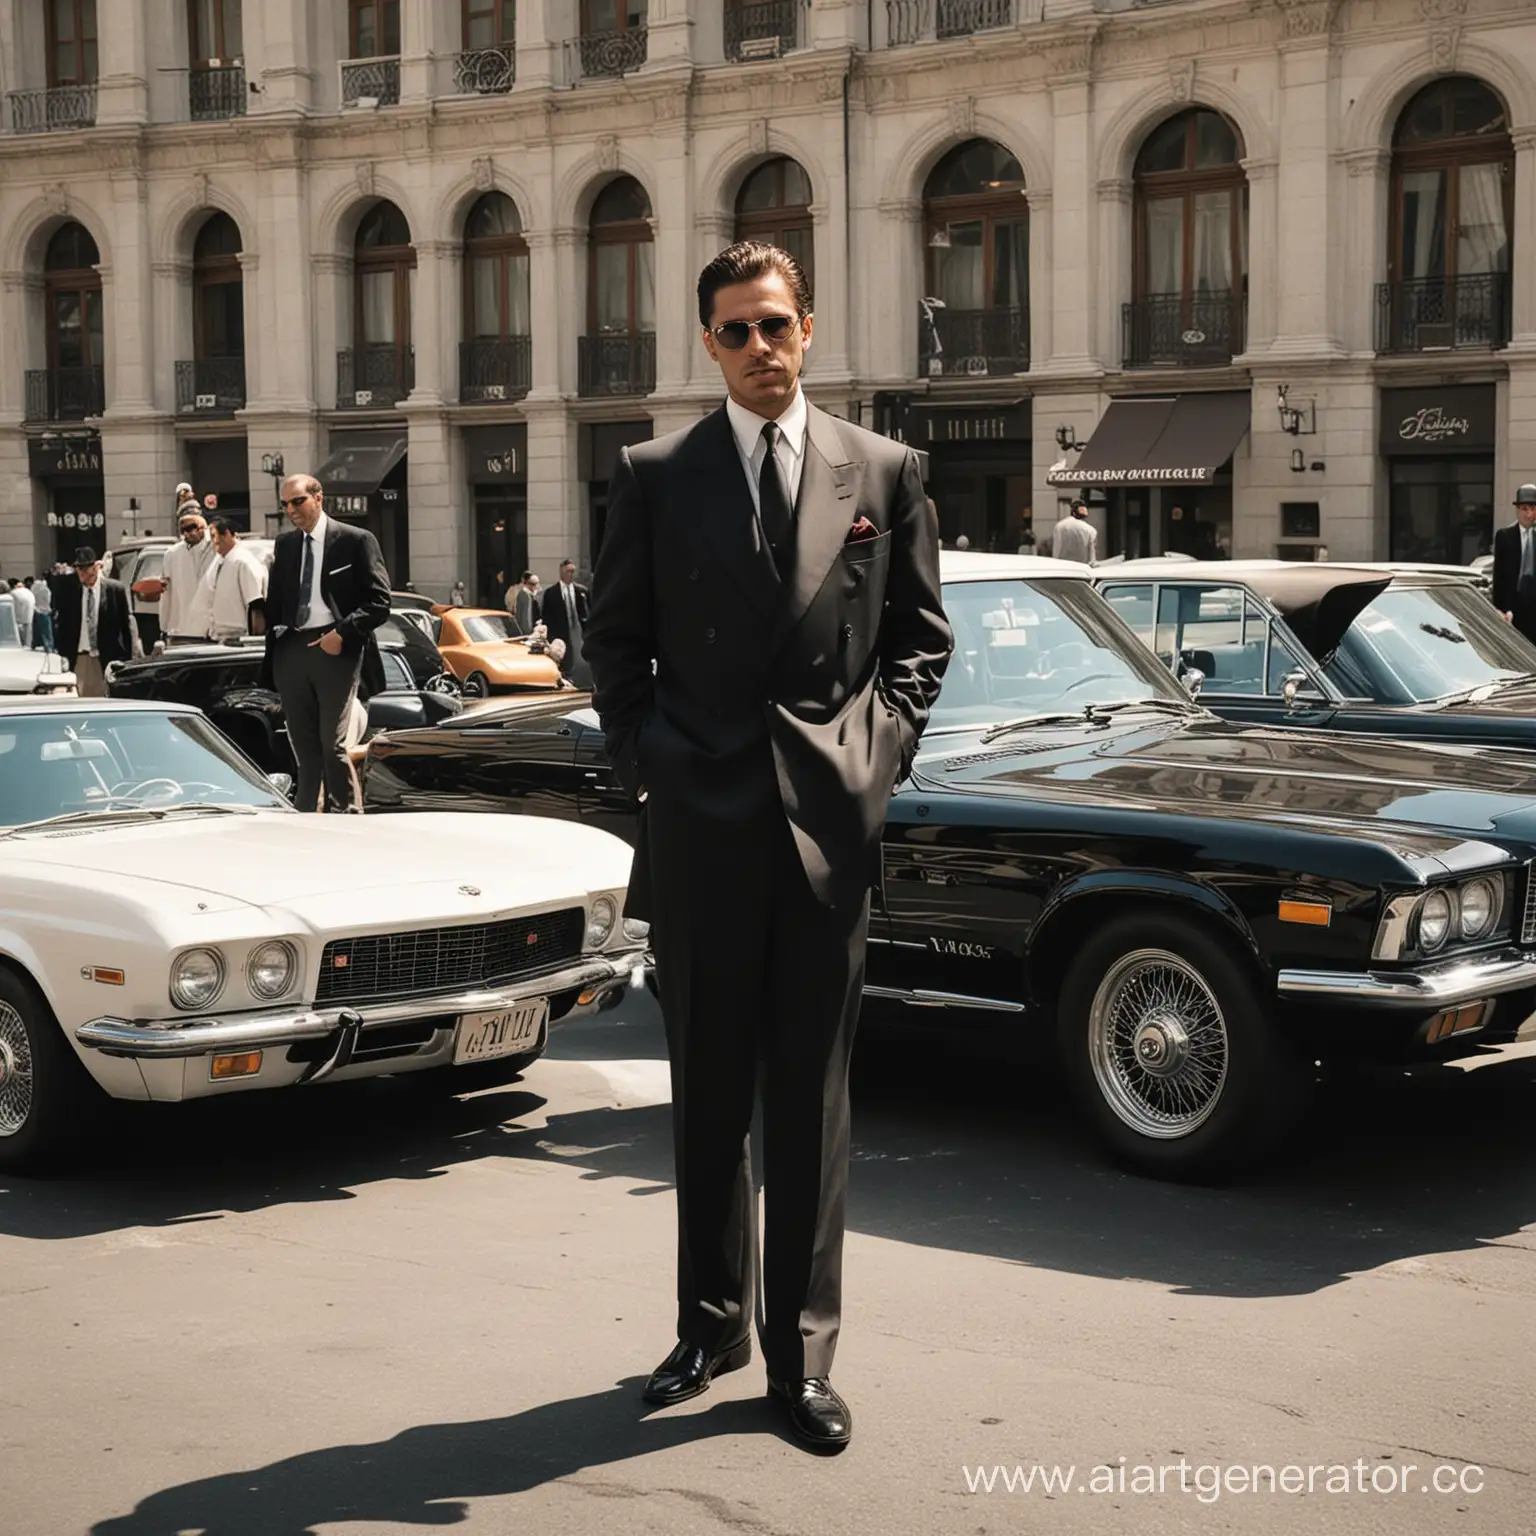 Mafioso-Posing-with-Luxury-Cars